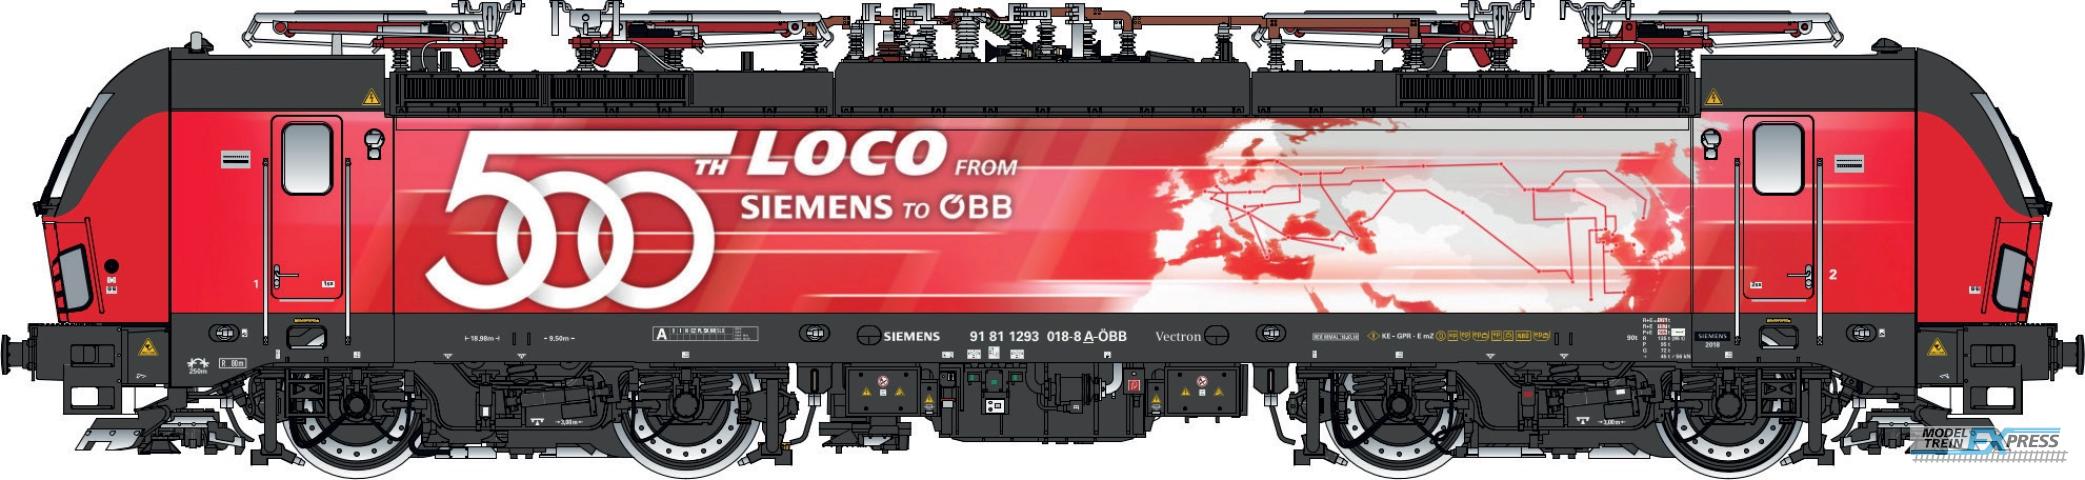 LS Models 17412 ÖBB Vectron MS 91 81 1293 018-8 A-ÖBB, red, "500th loco from Siemens to ÖBB"  /  Ep. VI  /  ---  /  HO  /  DC  /  1 P.